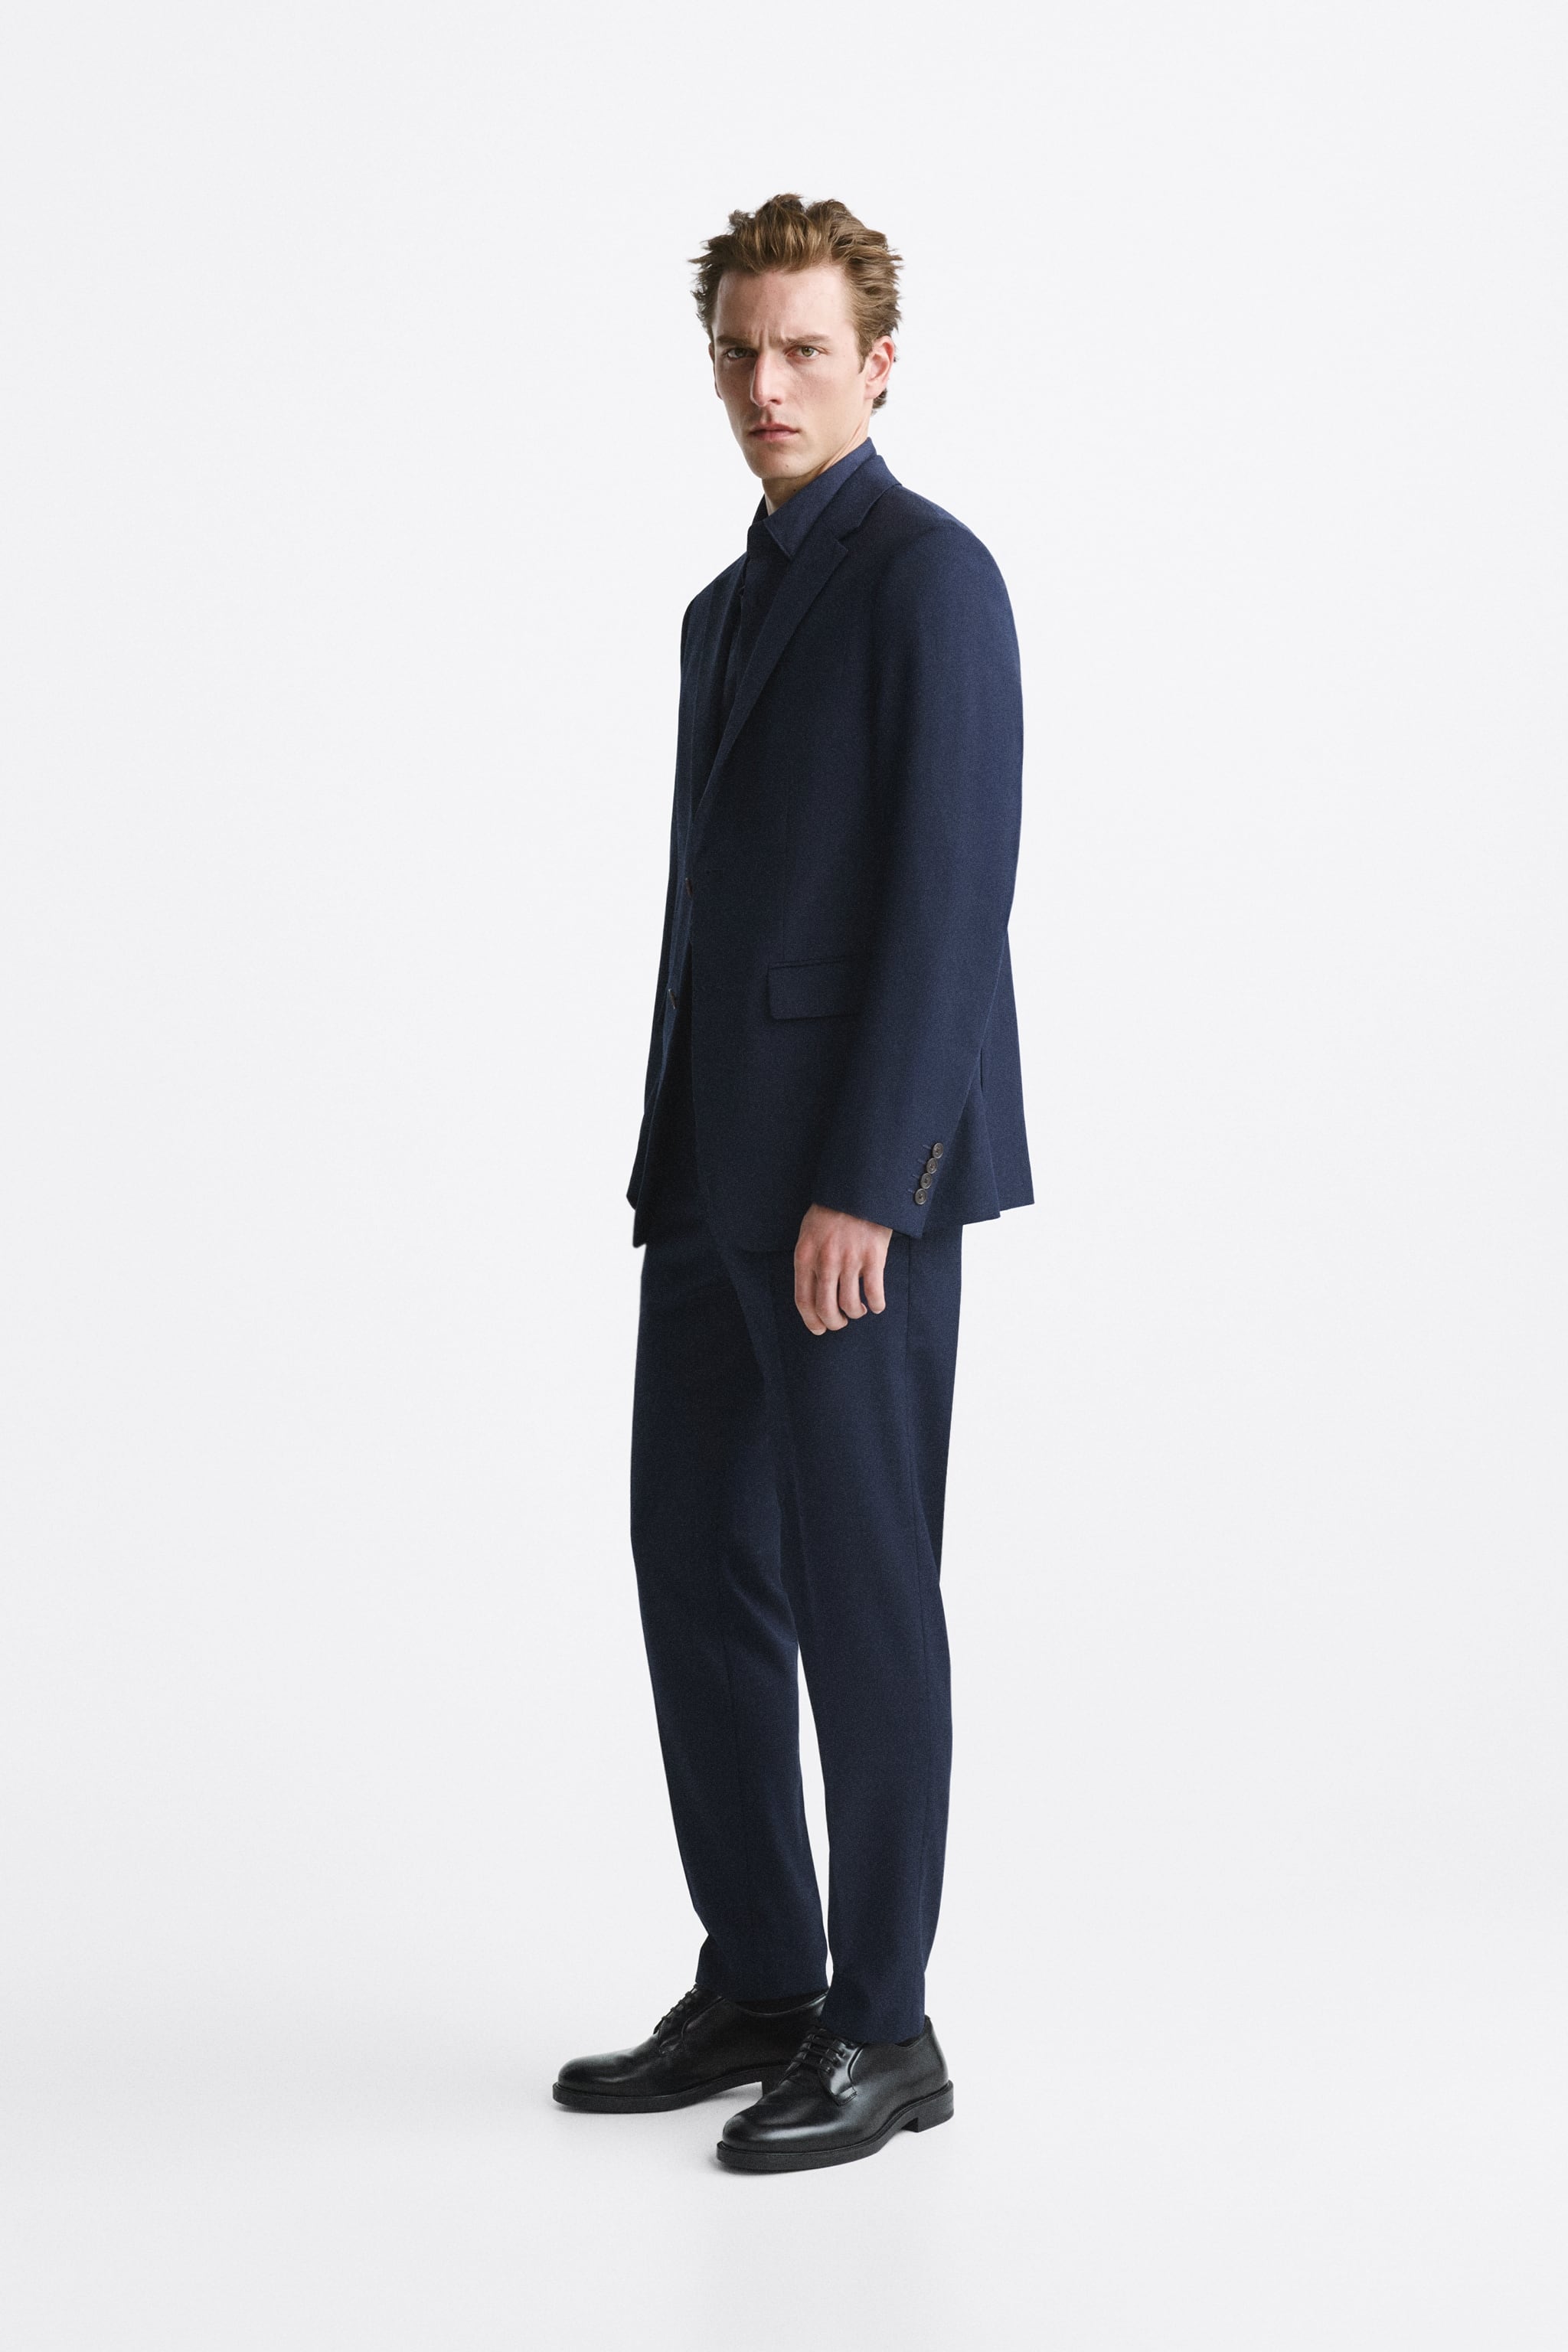 Zara Suits For Men | lupon.gov.ph